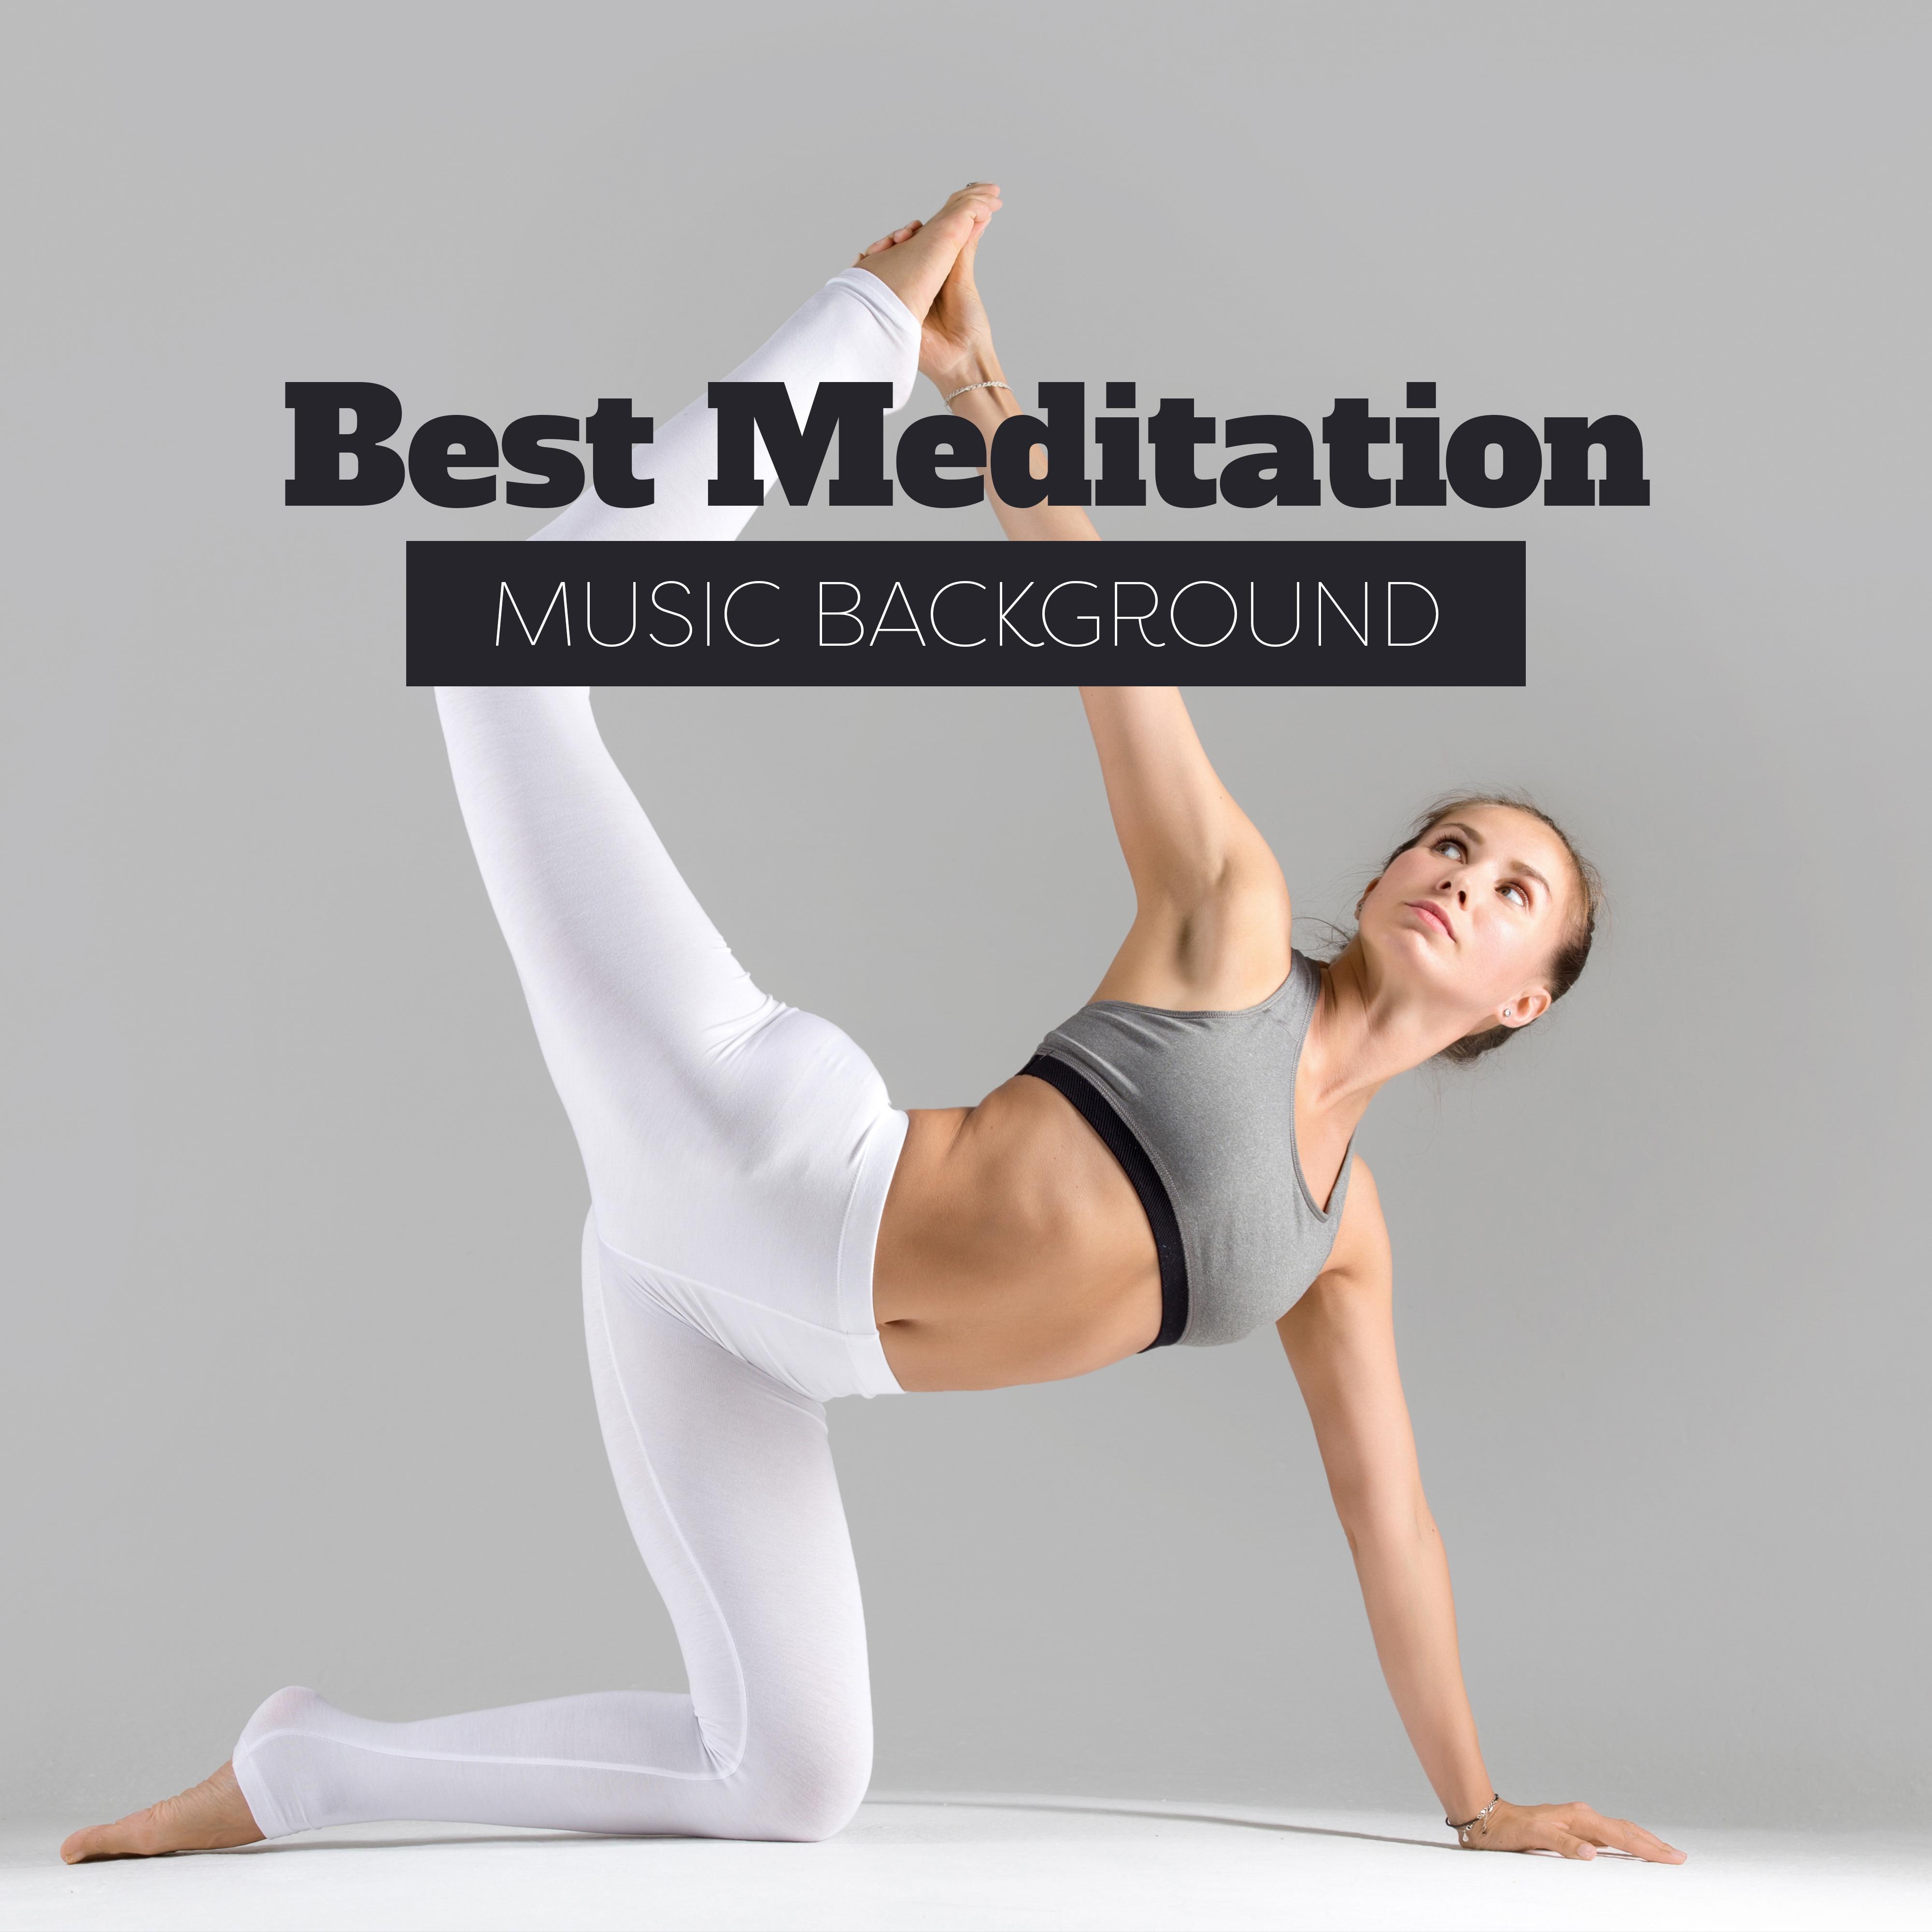 Best Meditation Music Background